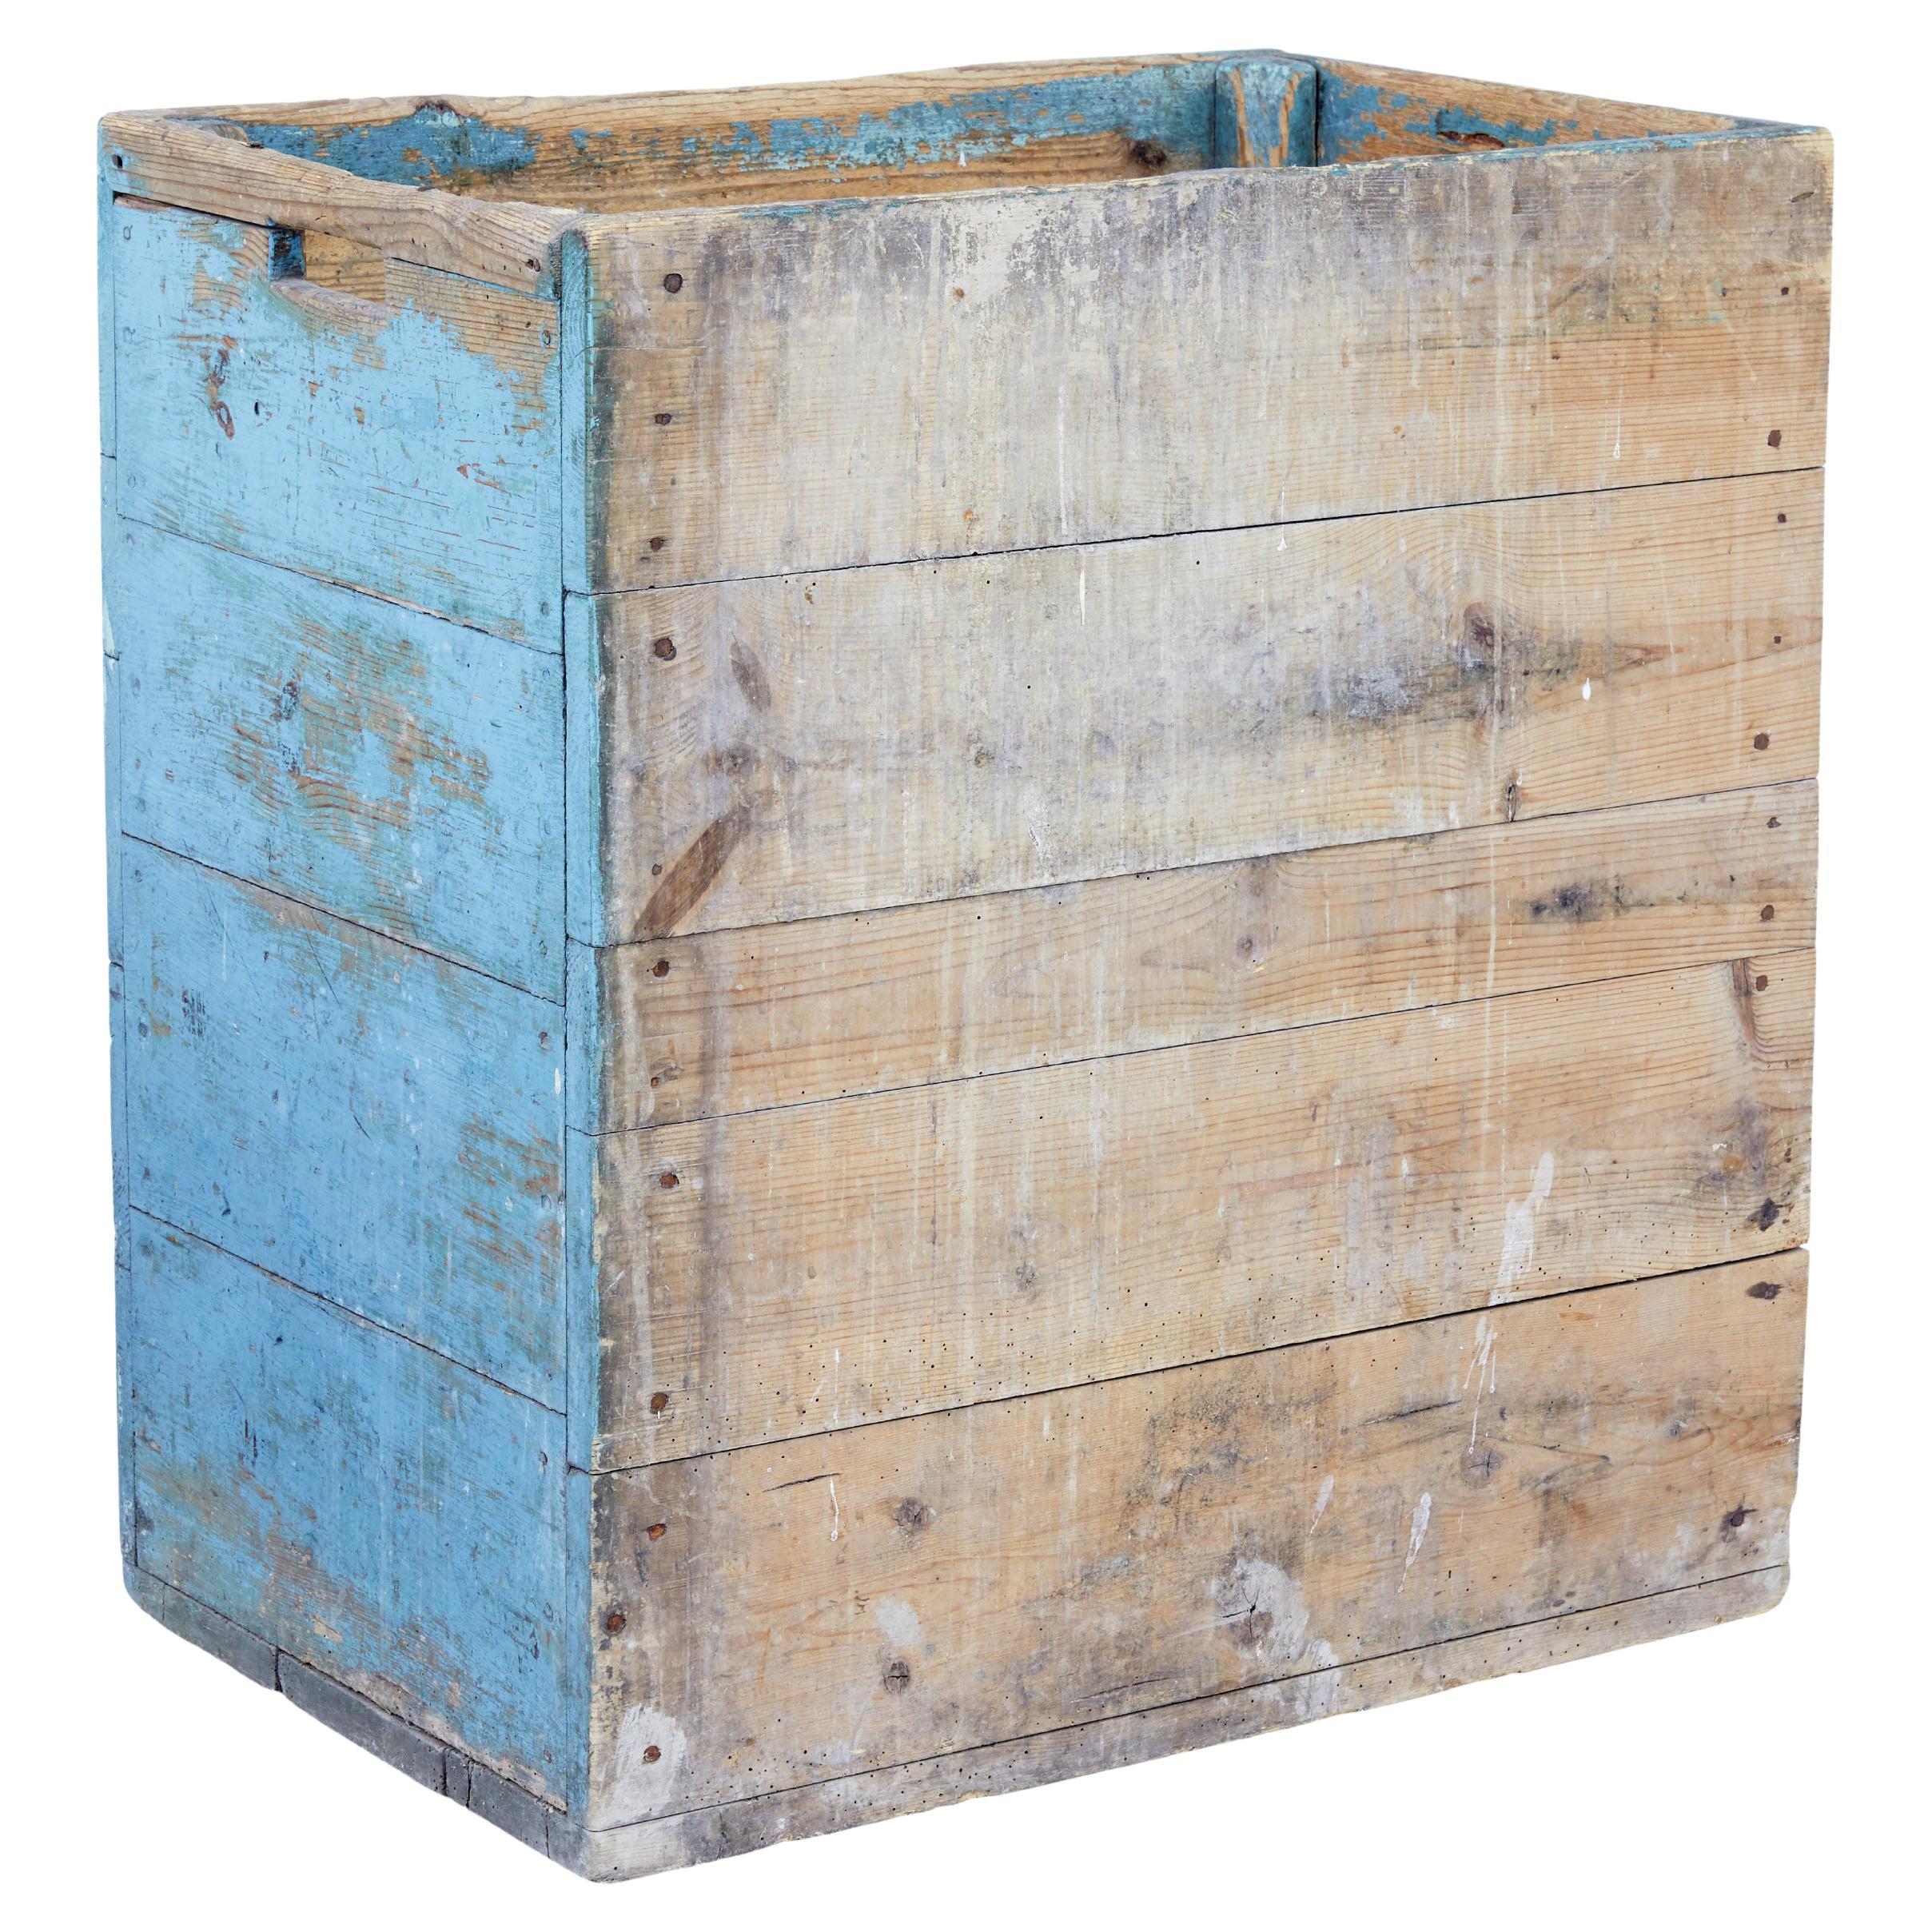 19th Century Swedish Pine Log Box